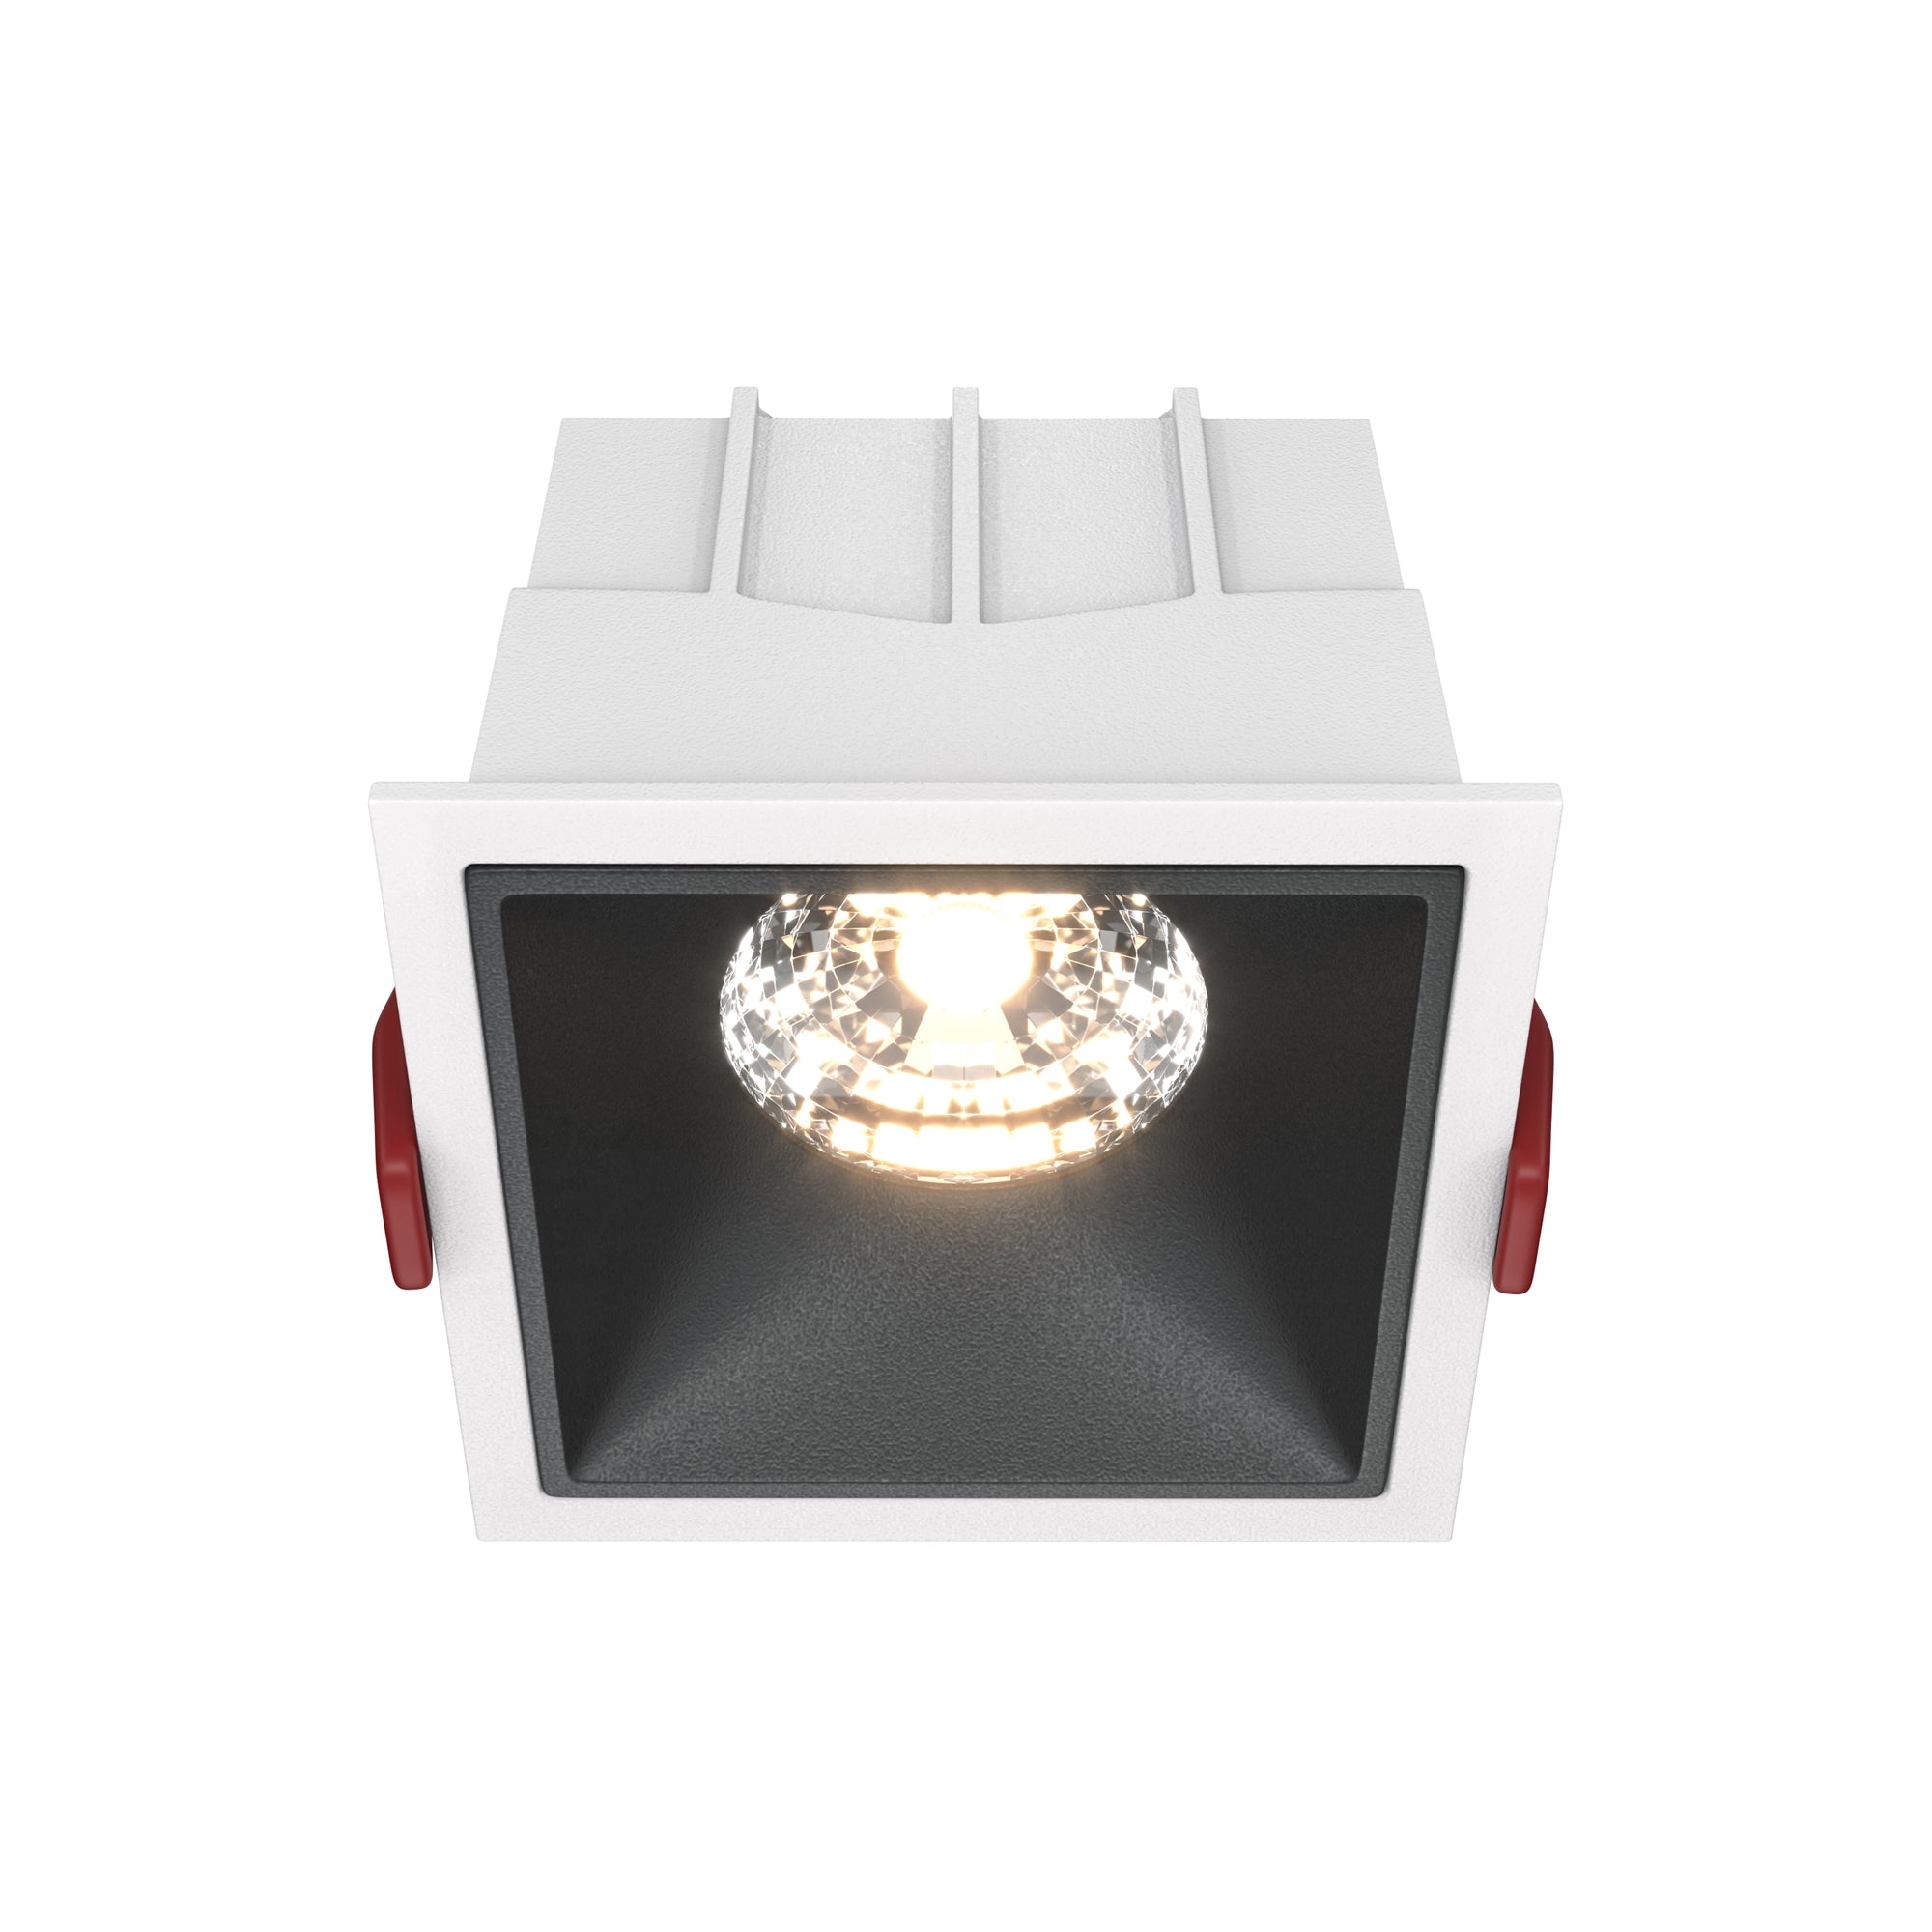 Alfa LED Recessed Ceiling Lights